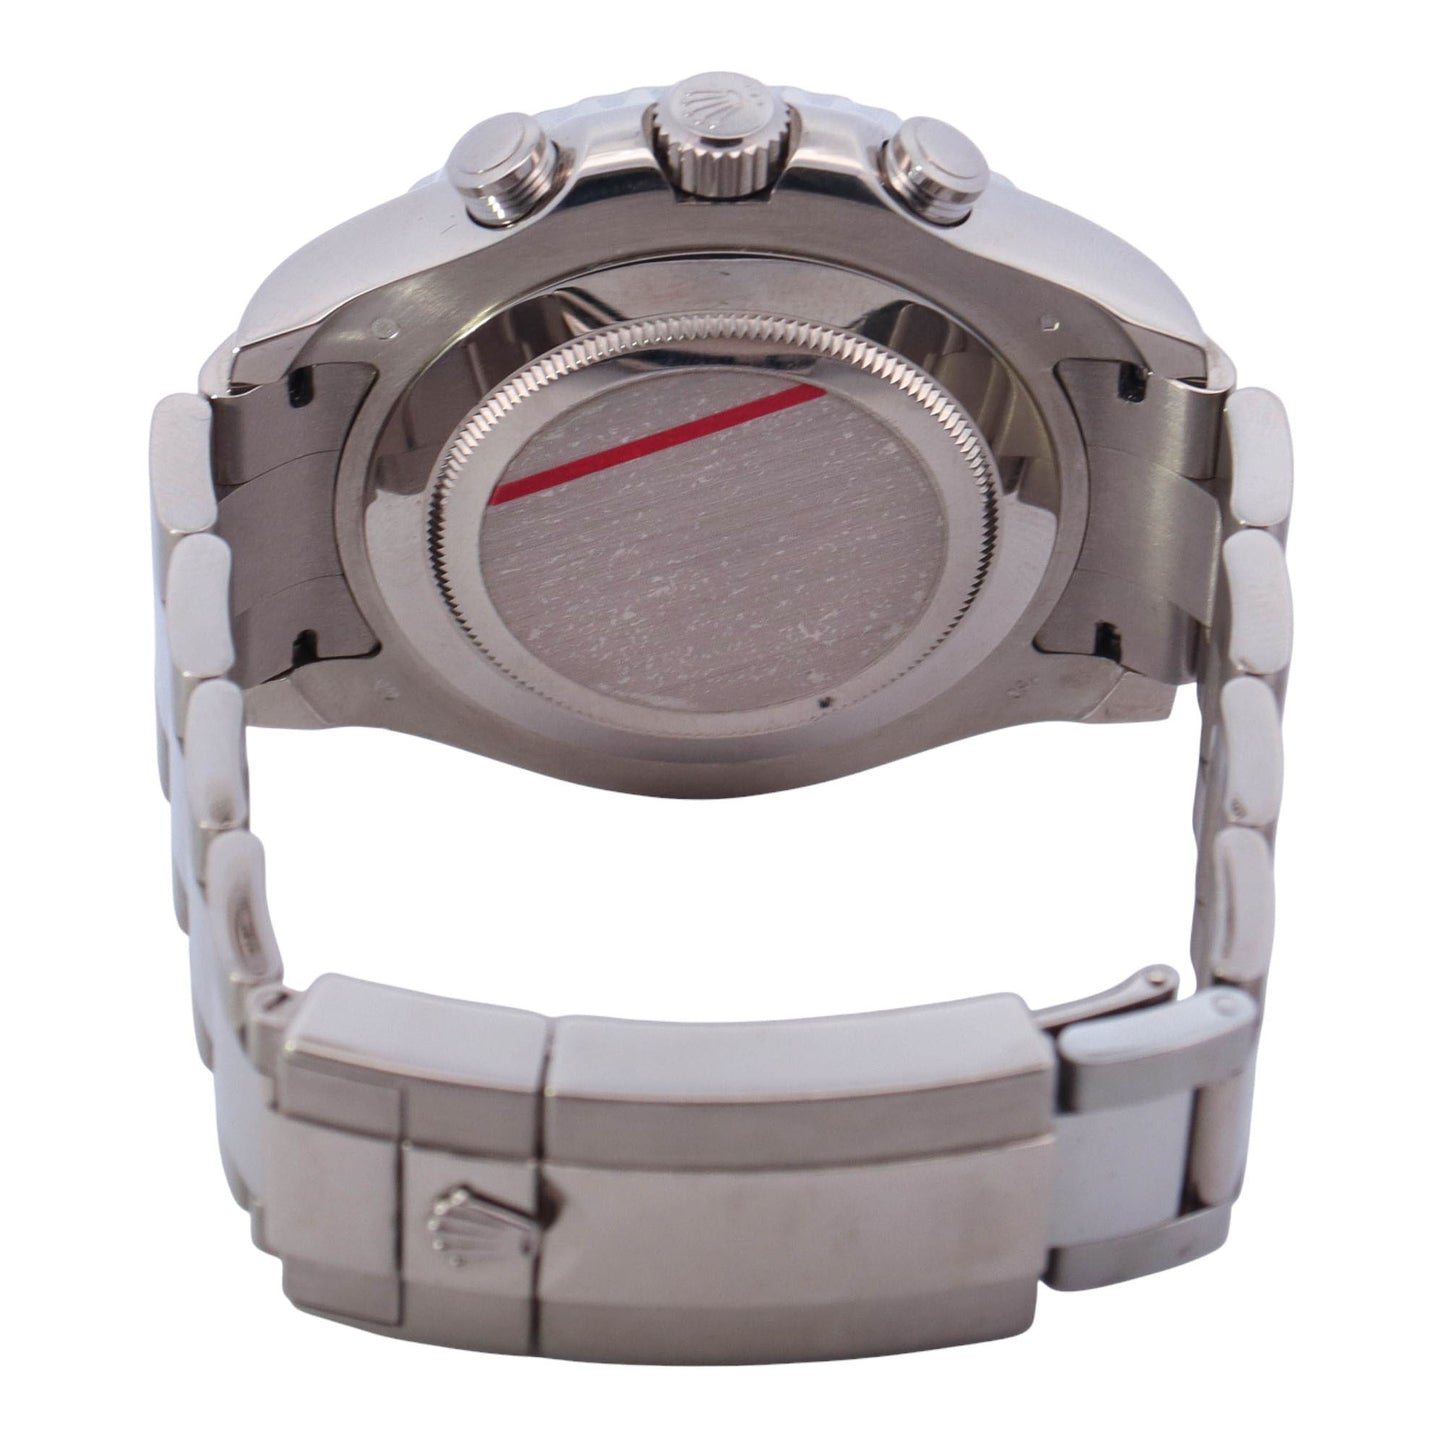 Rolex Yacht-Master II White Gold 44mm White Dot Dial Watch Reference# 116689 - Happy Jewelers Fine Jewelry Lifetime Warranty